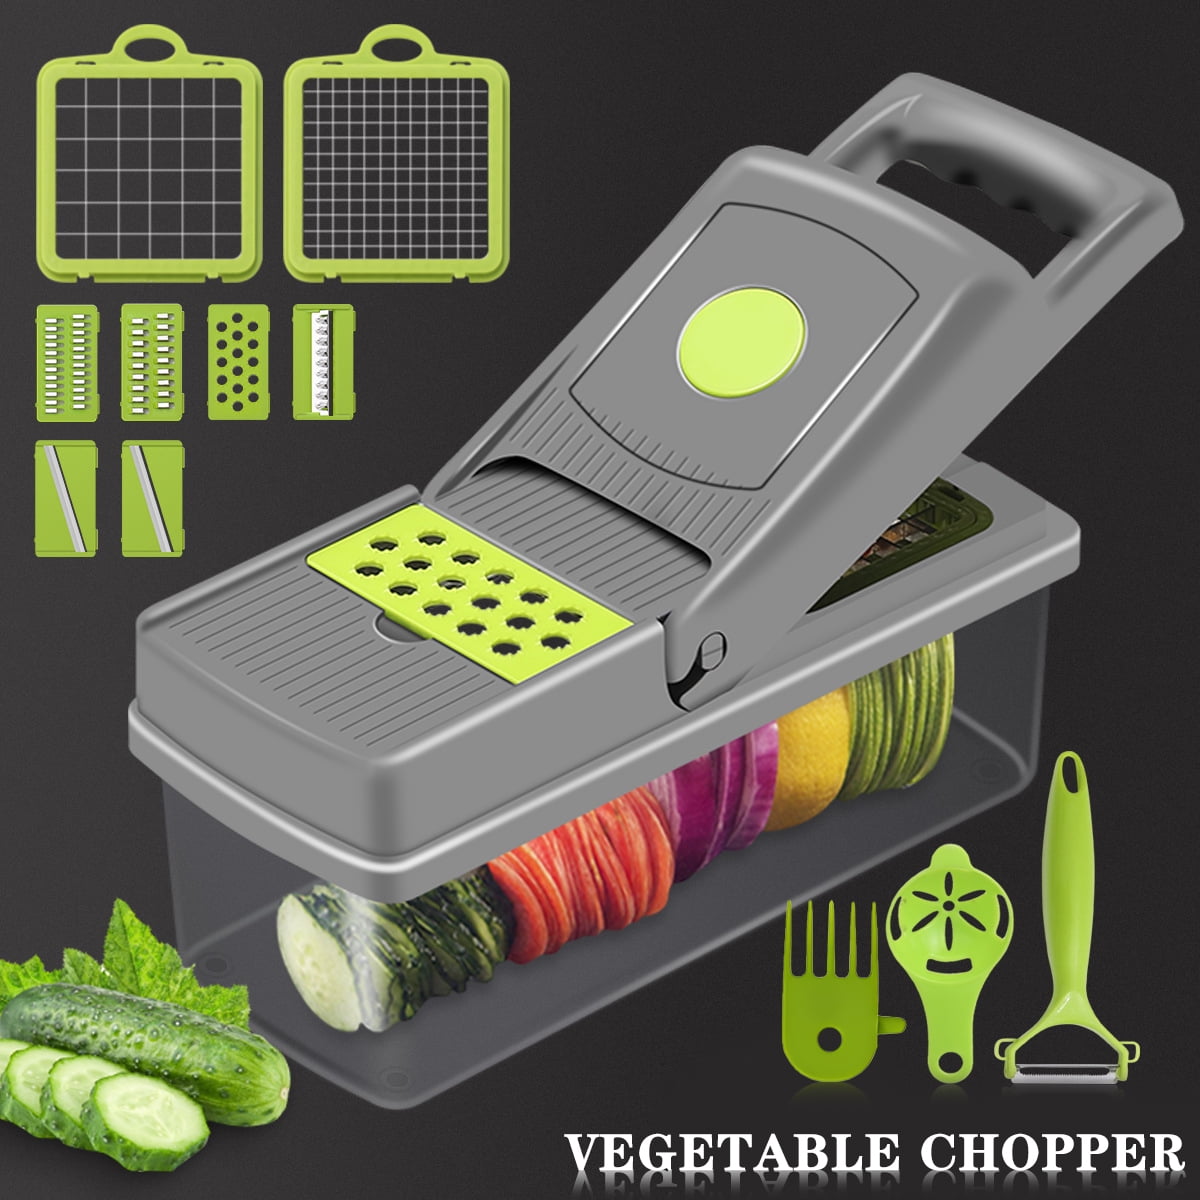 MEKBOK Mandoline Slicer Adjustable Vegetable Chopper Multifunctional  Vegetable Cutter Food Chopper with Hand Guard Sharp Stainless Steel Blades  for